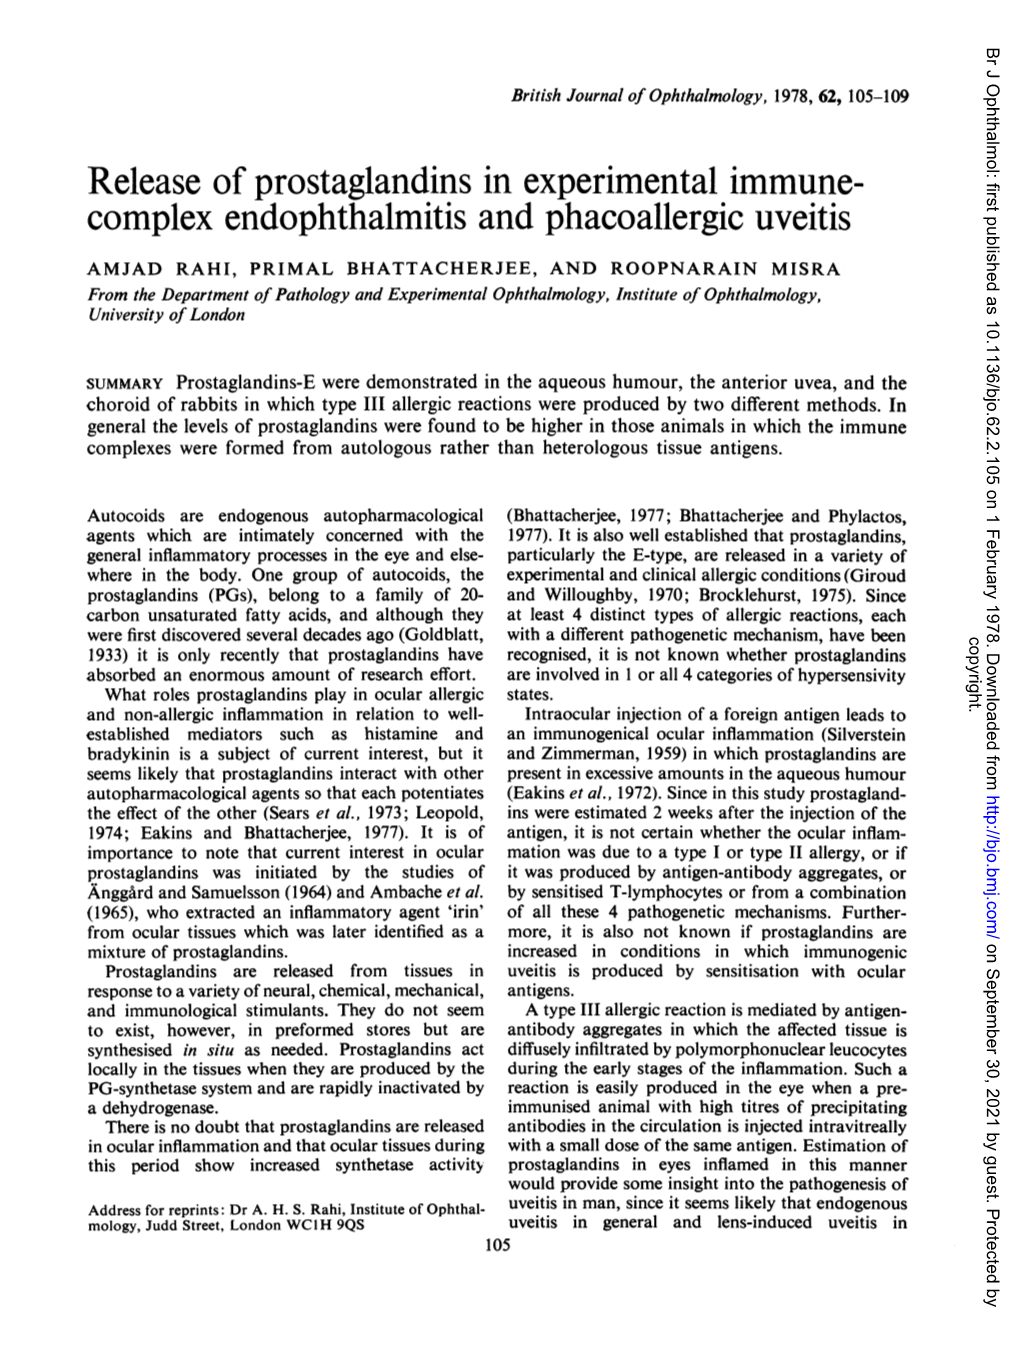 Complex Endophthalmitis and Phacoallergic Uveitis